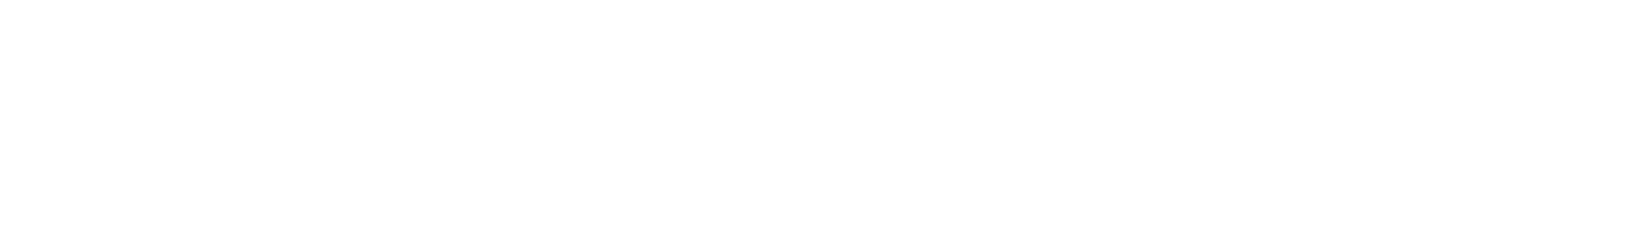 Podcastory-logo